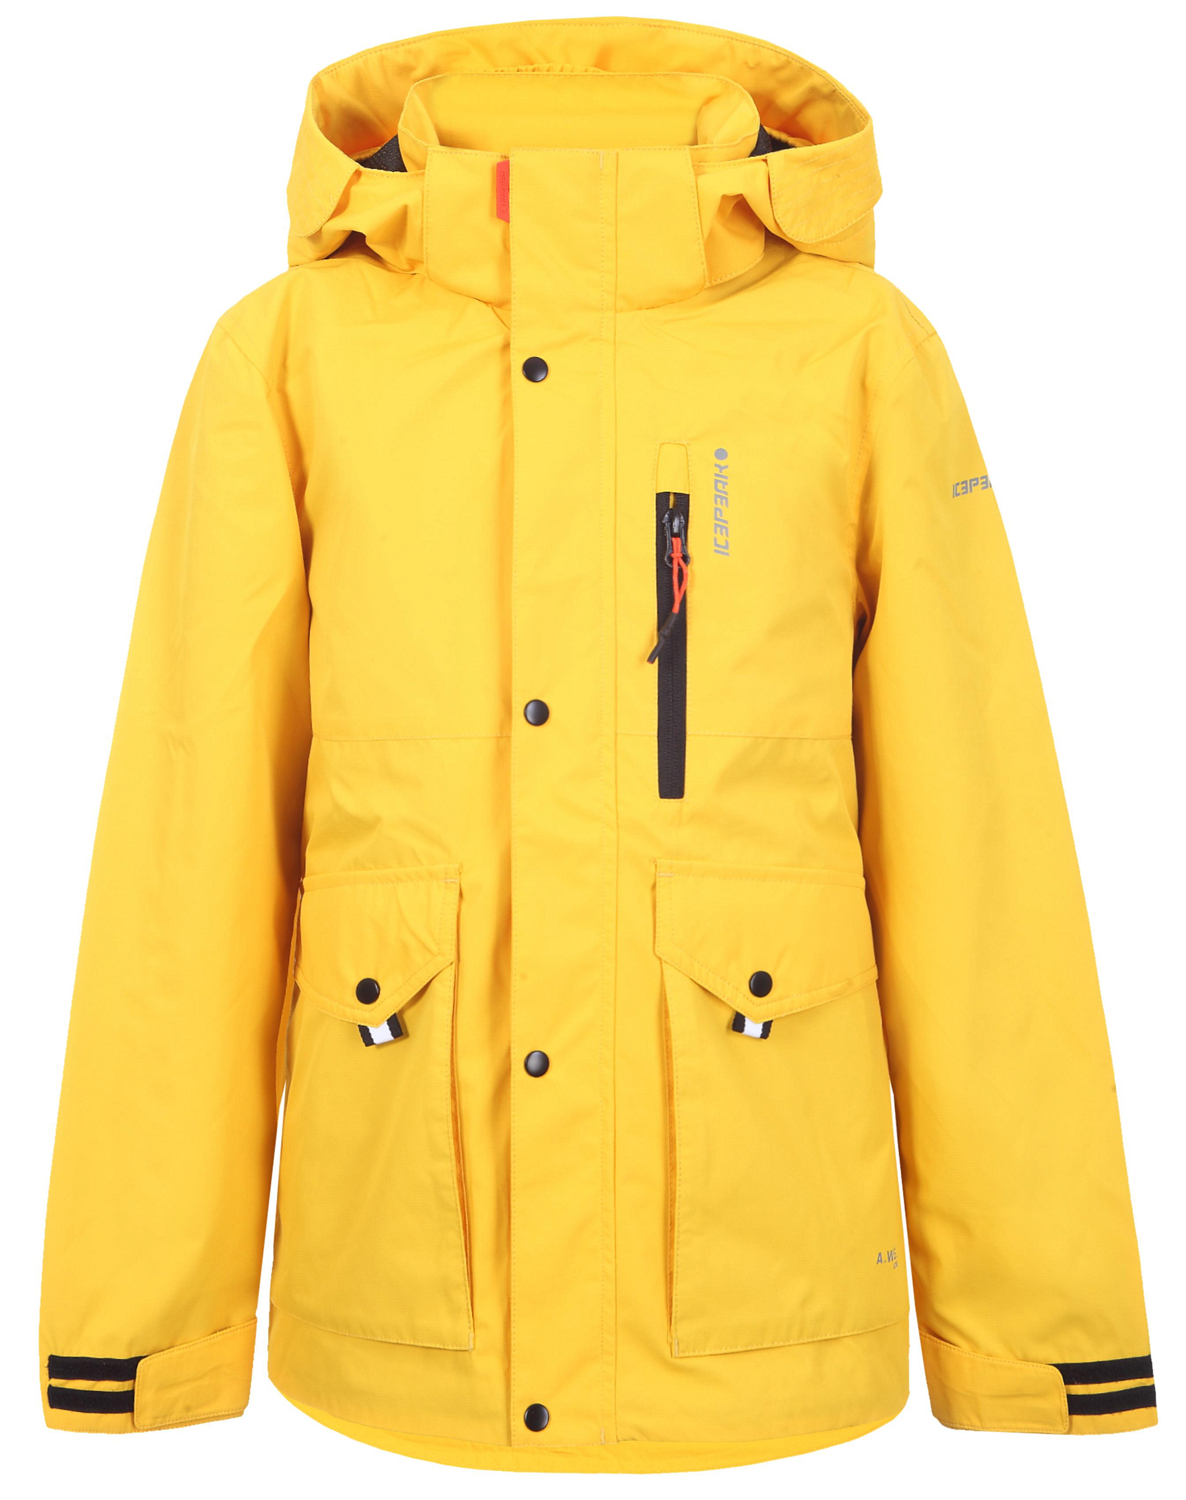 Куртка детская Icepeak Lawler Jr Yellow